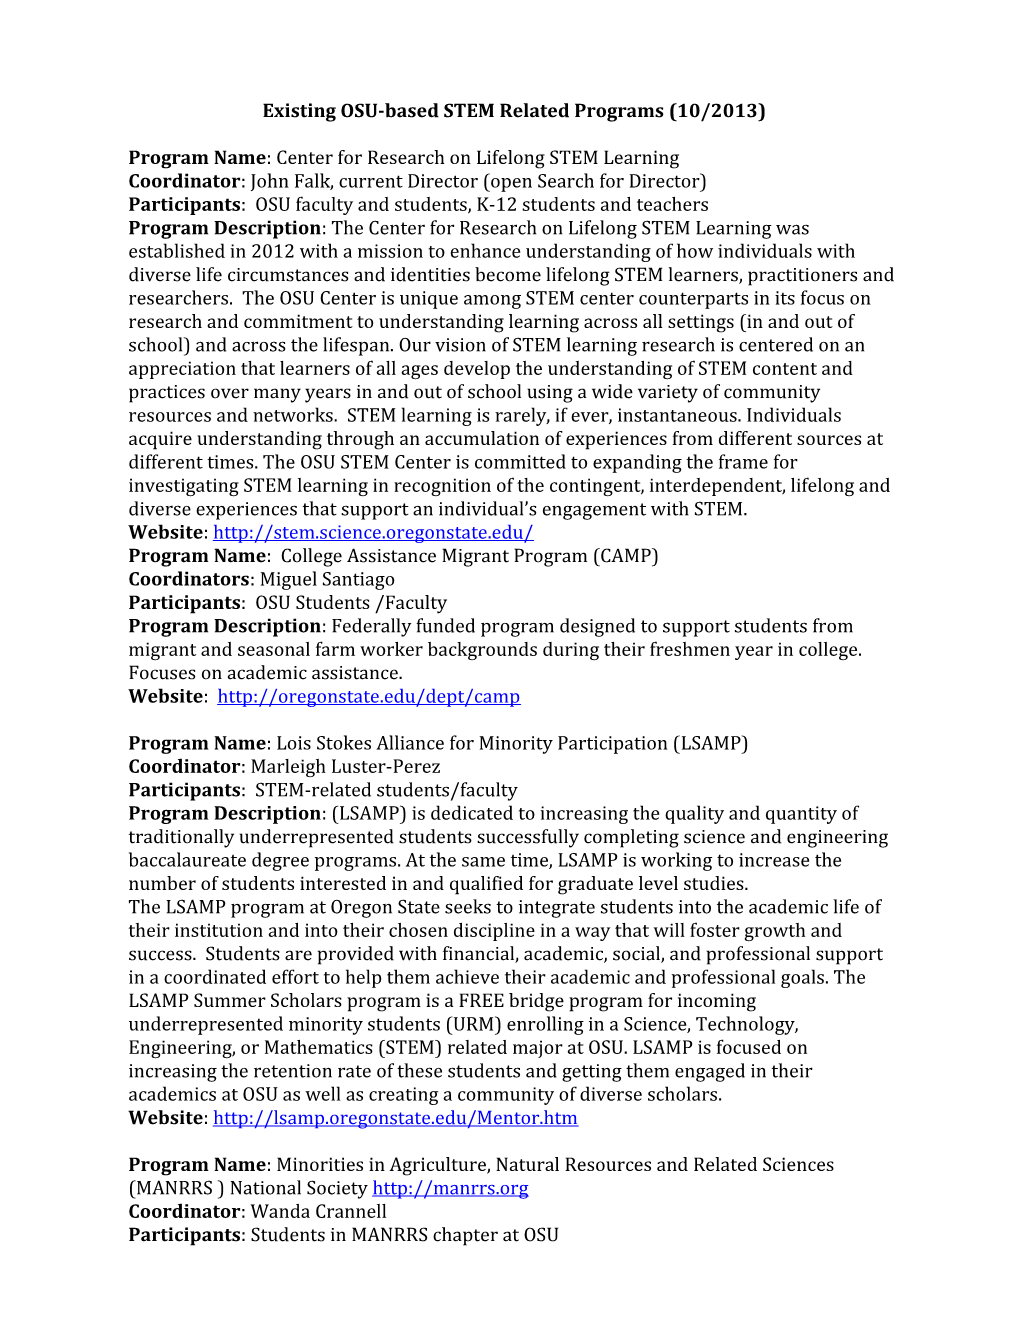 Existing OSU-Based STEM Related Programs (10/2013)